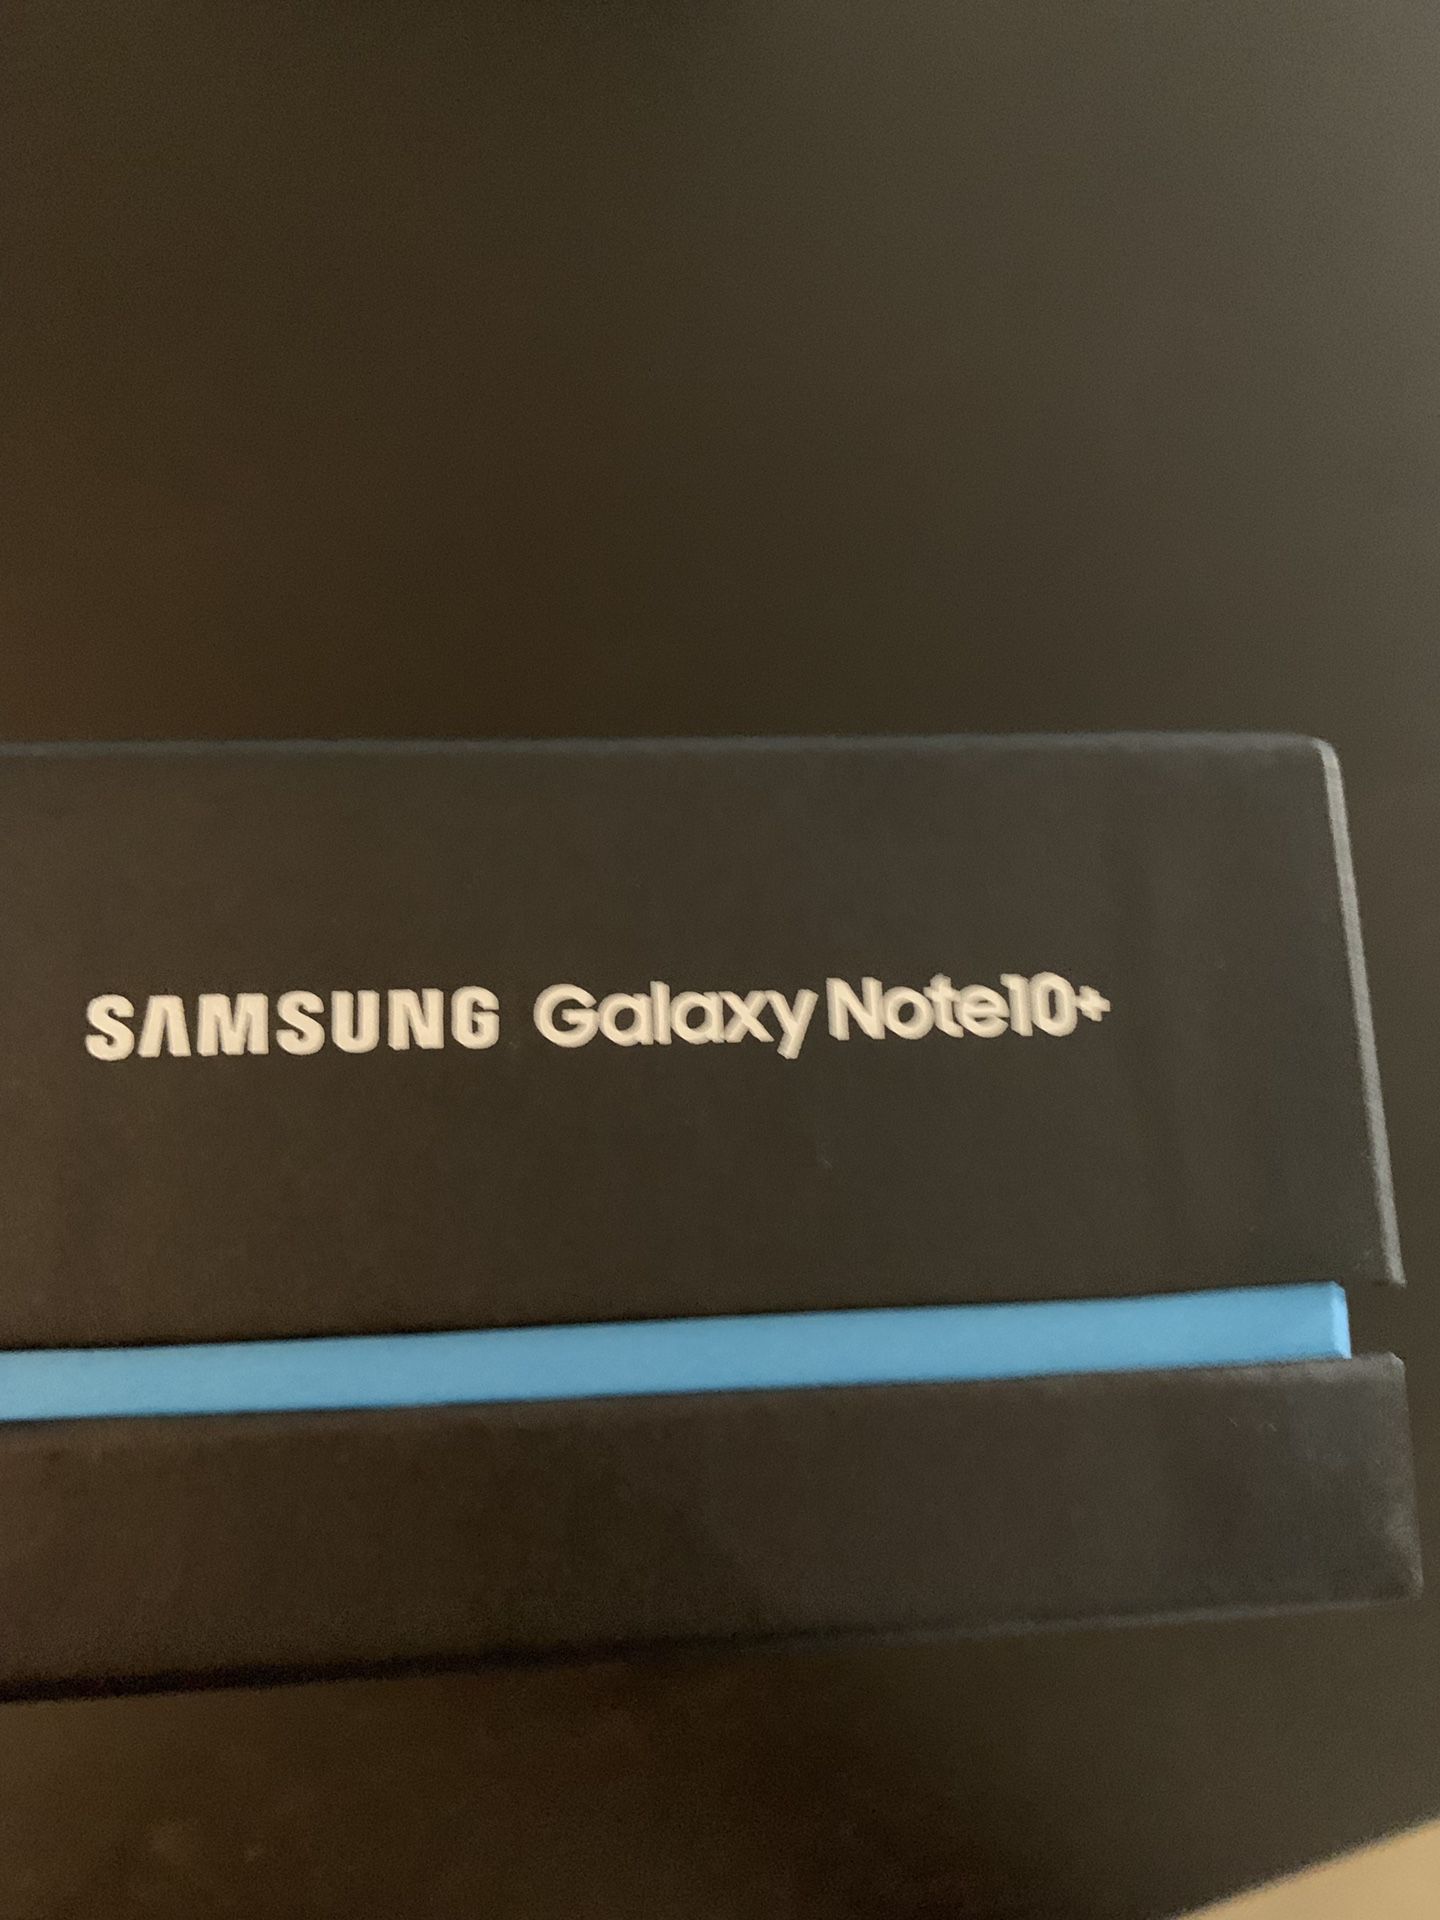 Samsung Galaxy note 10 plus 256 GB black unlocked sealed in box